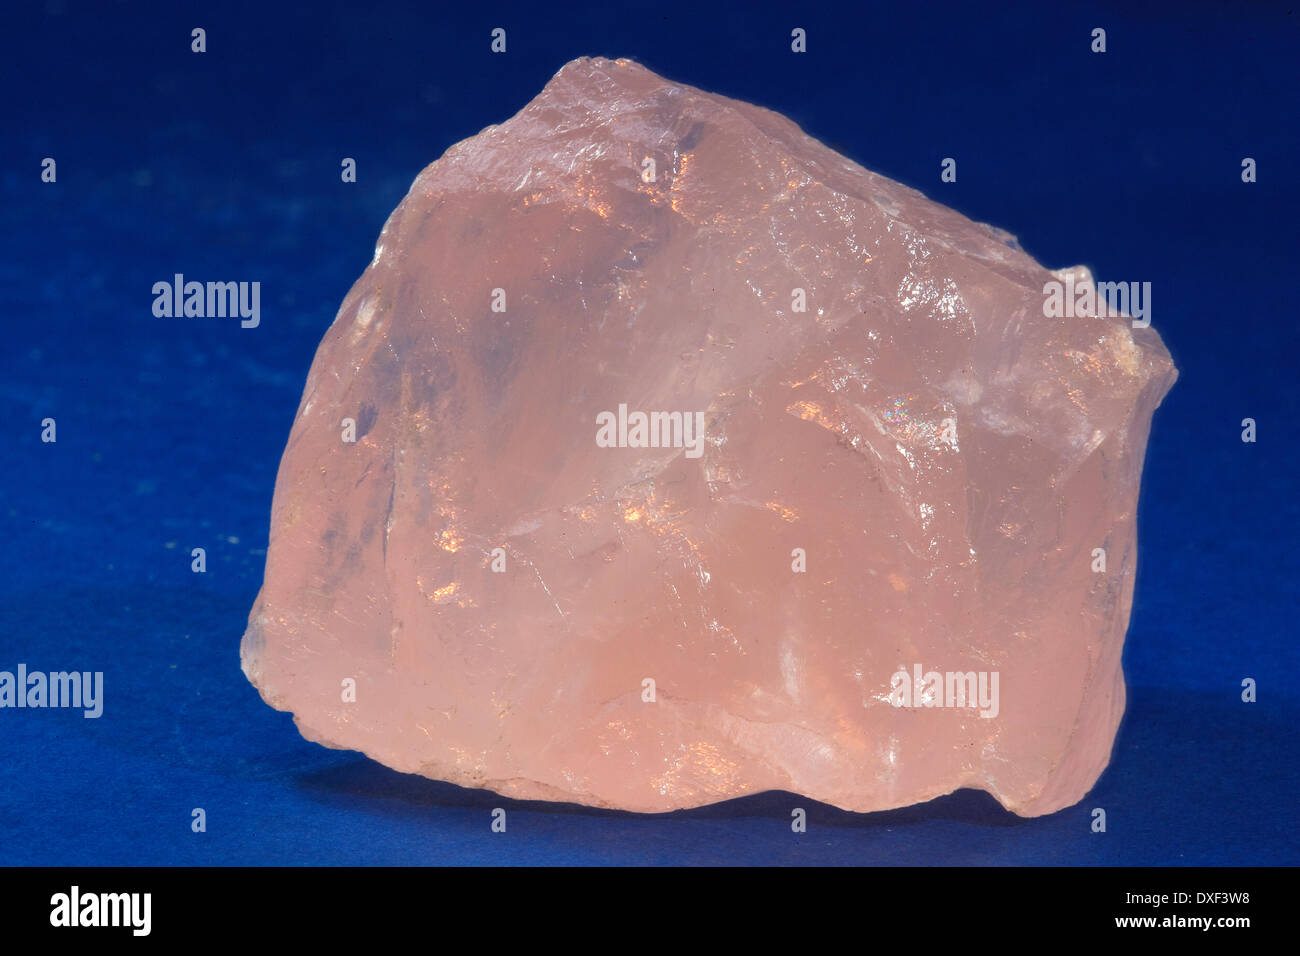 a geological sample of rose quartz. Stock Photo